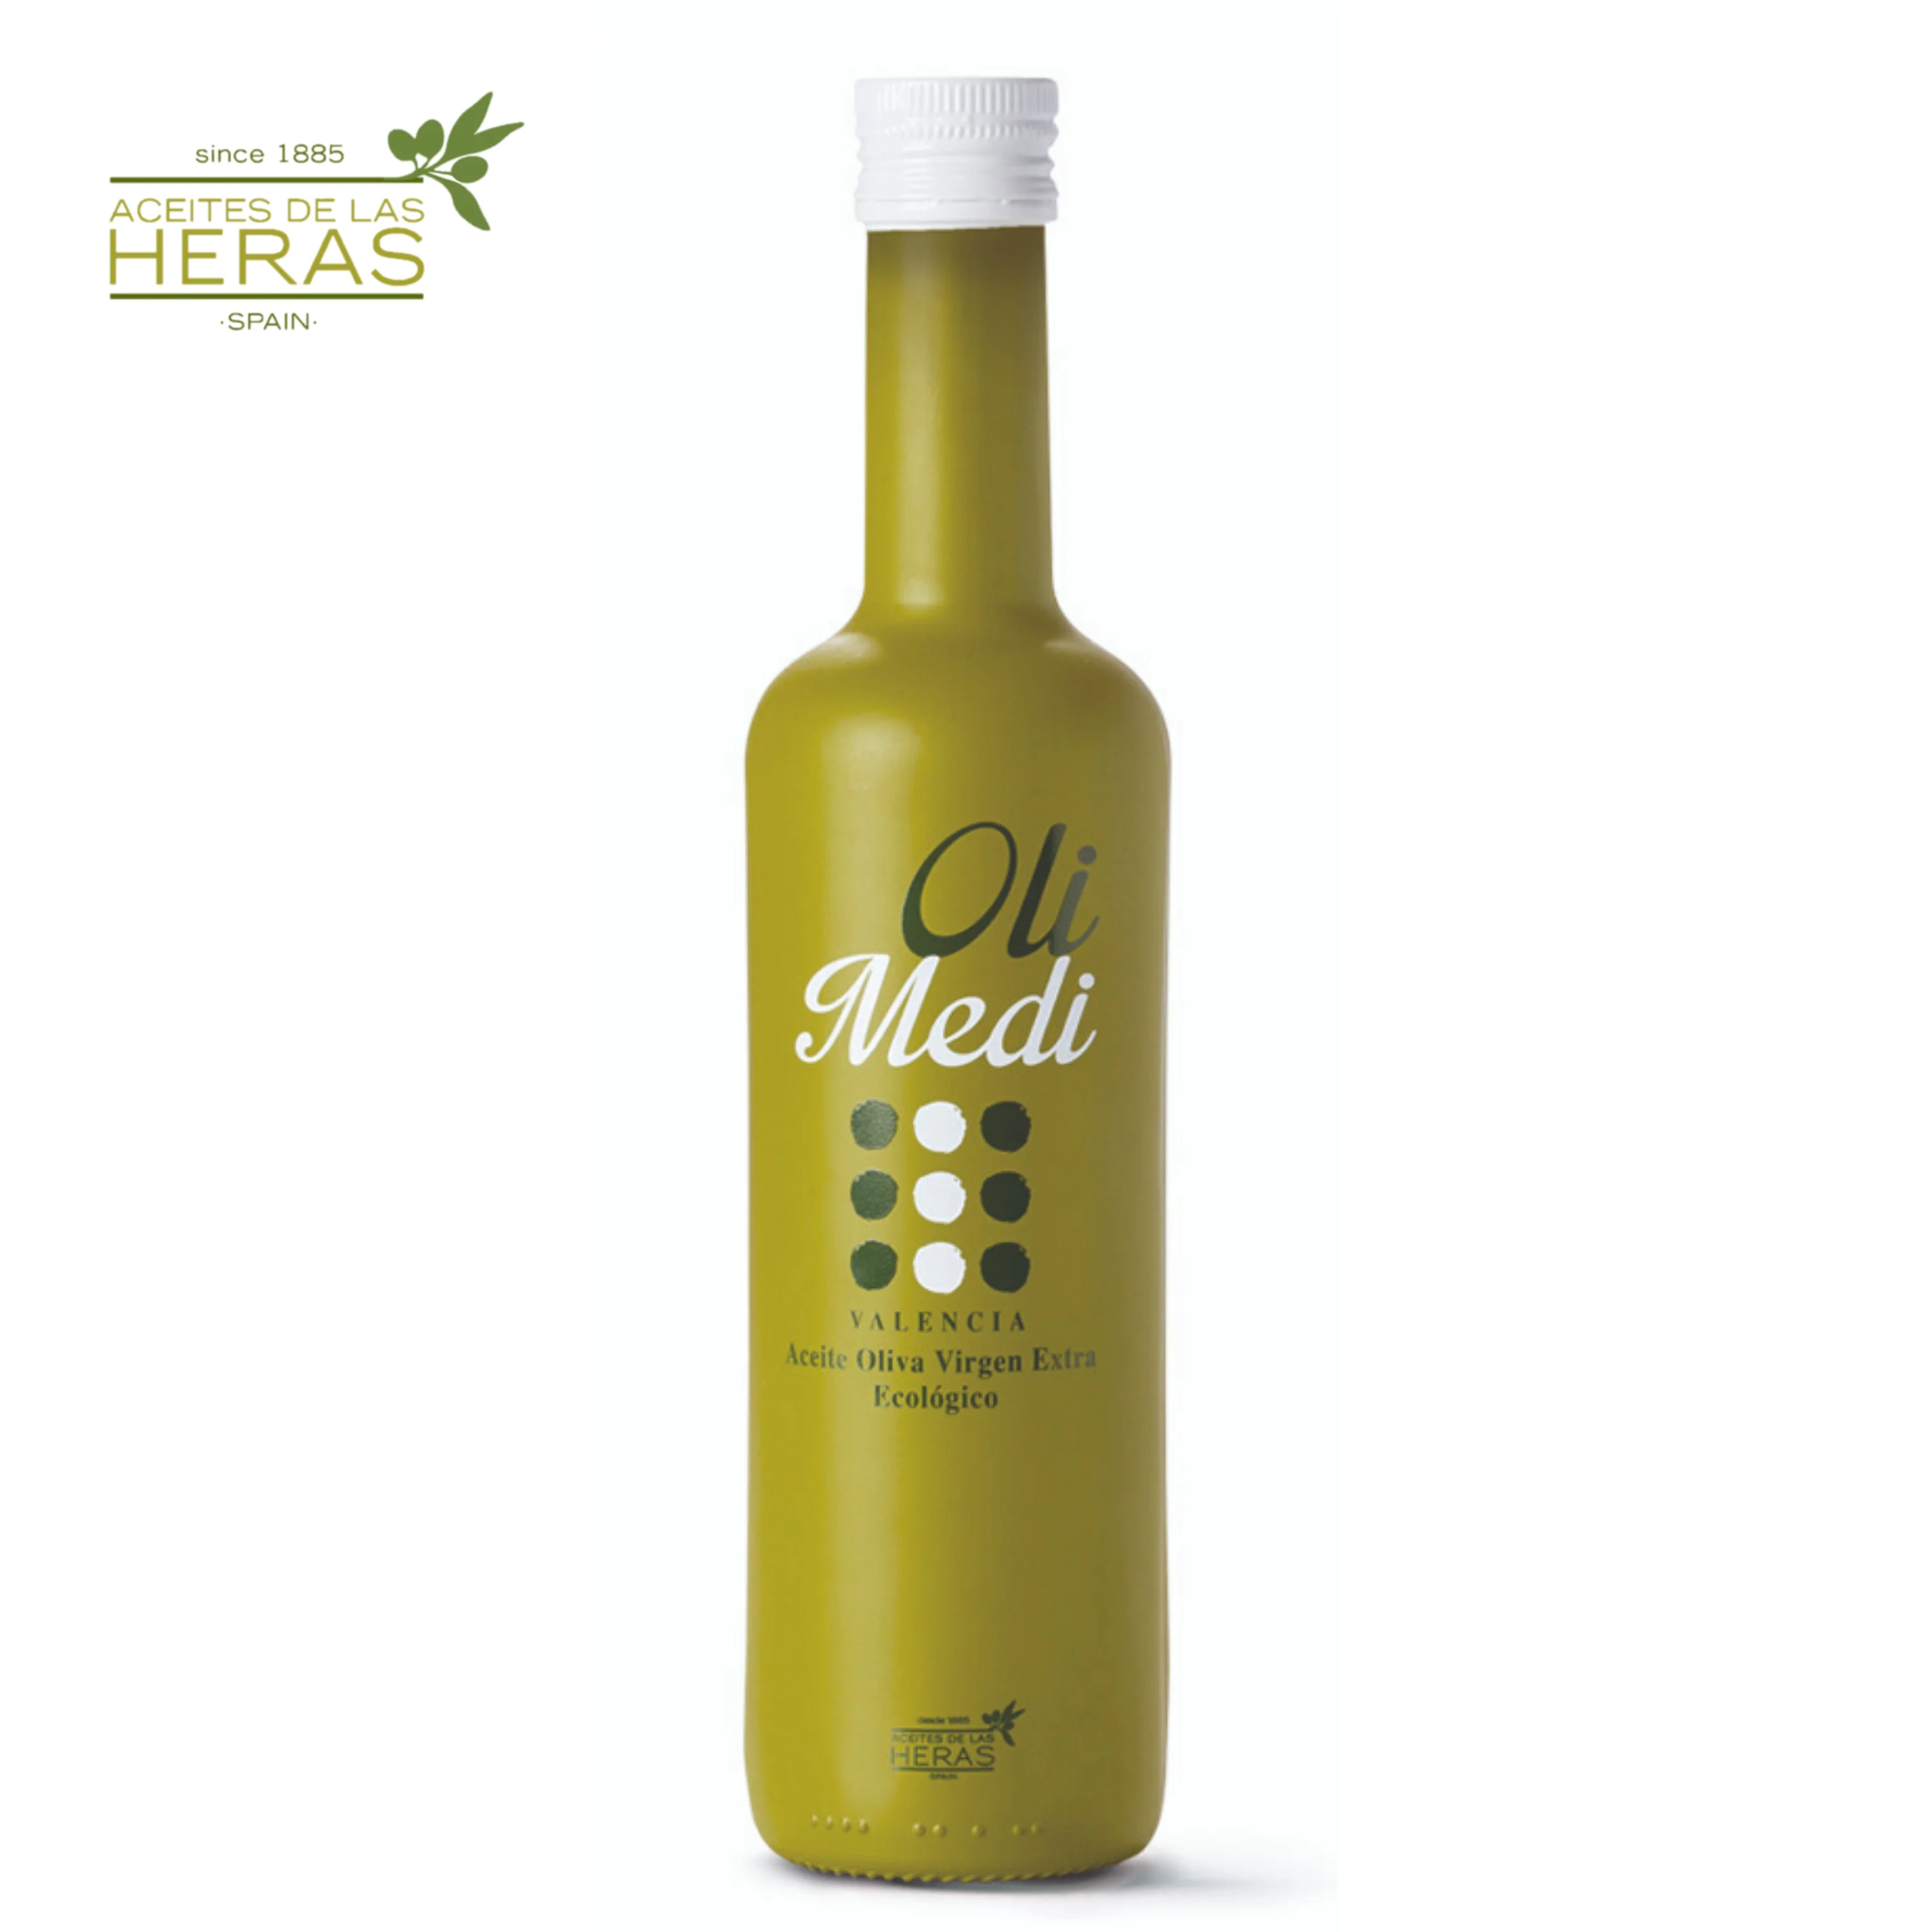 Olimedi - Organic Extra Virgin Olive Oil - 500 ml Glass Bottle - 100% Natural Organic EVOO from Spain